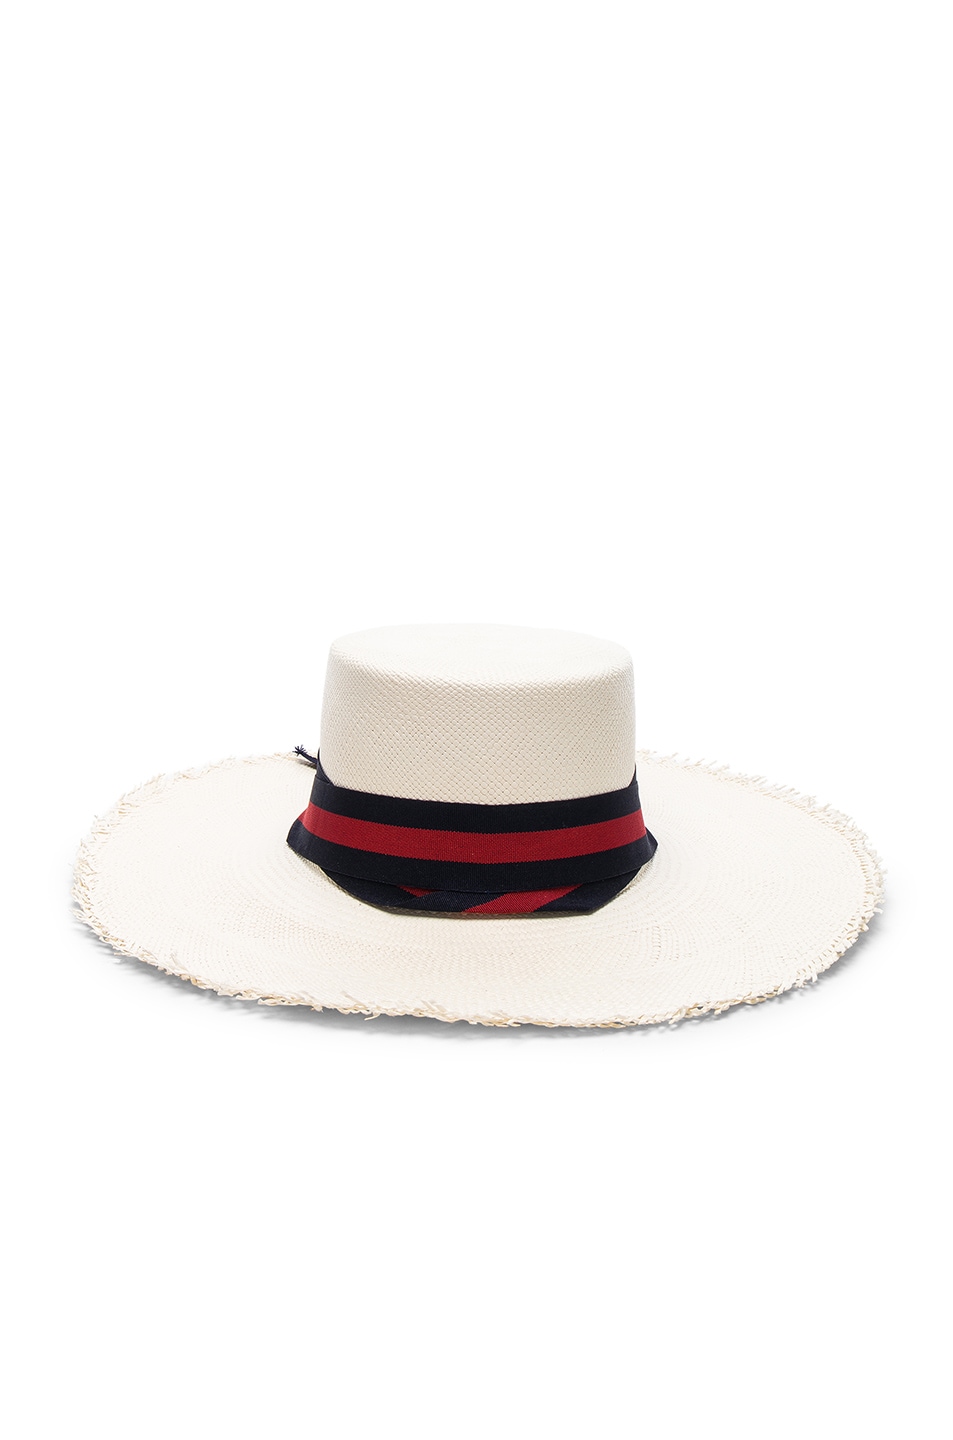 Image 1 of SENSI STUDIO Frayed Boater Hat in White, Navy & Red